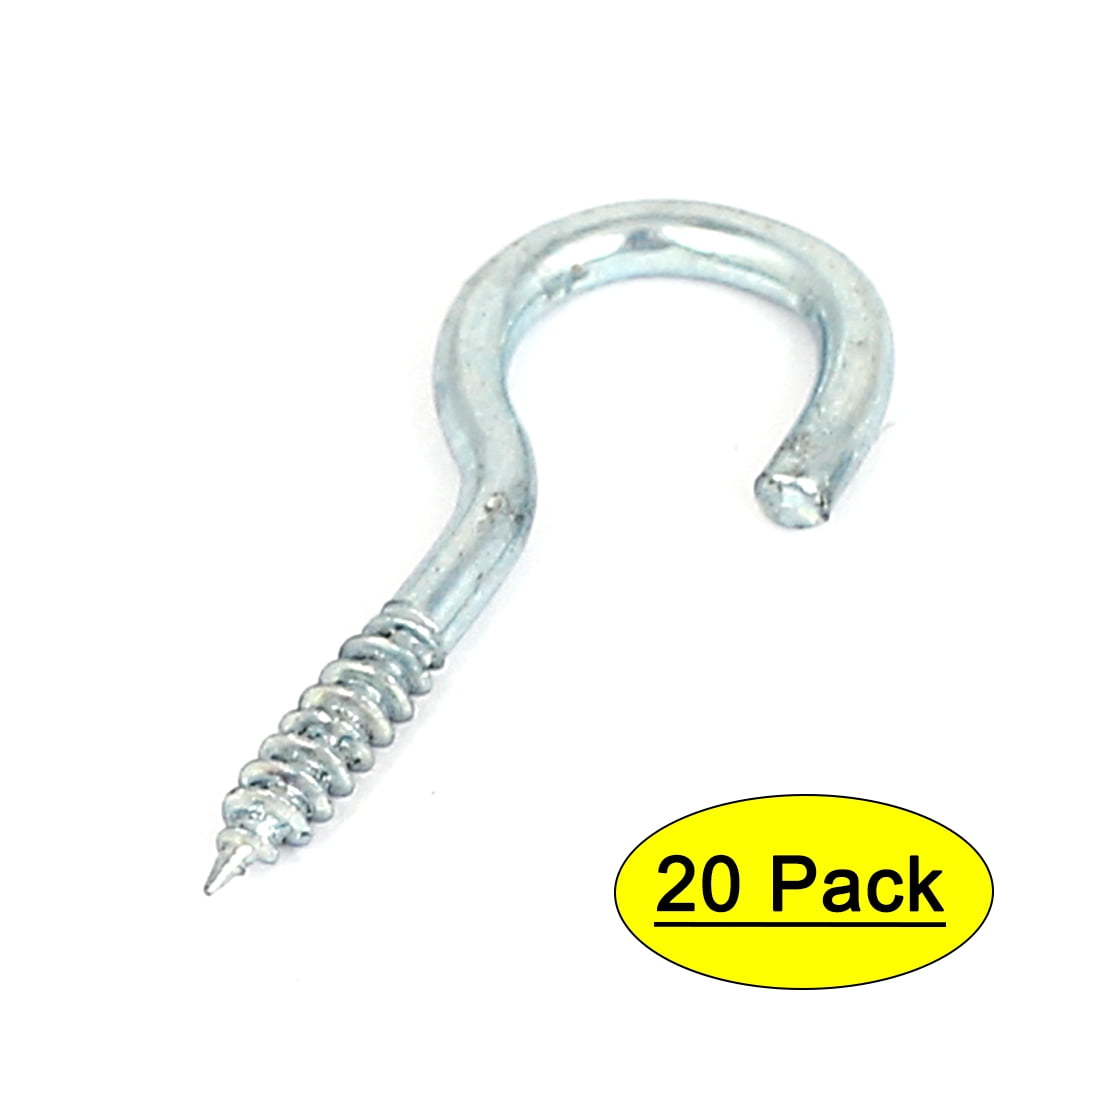  NX Garden 100pcs Mini Stainless Steel Wire Eyepins